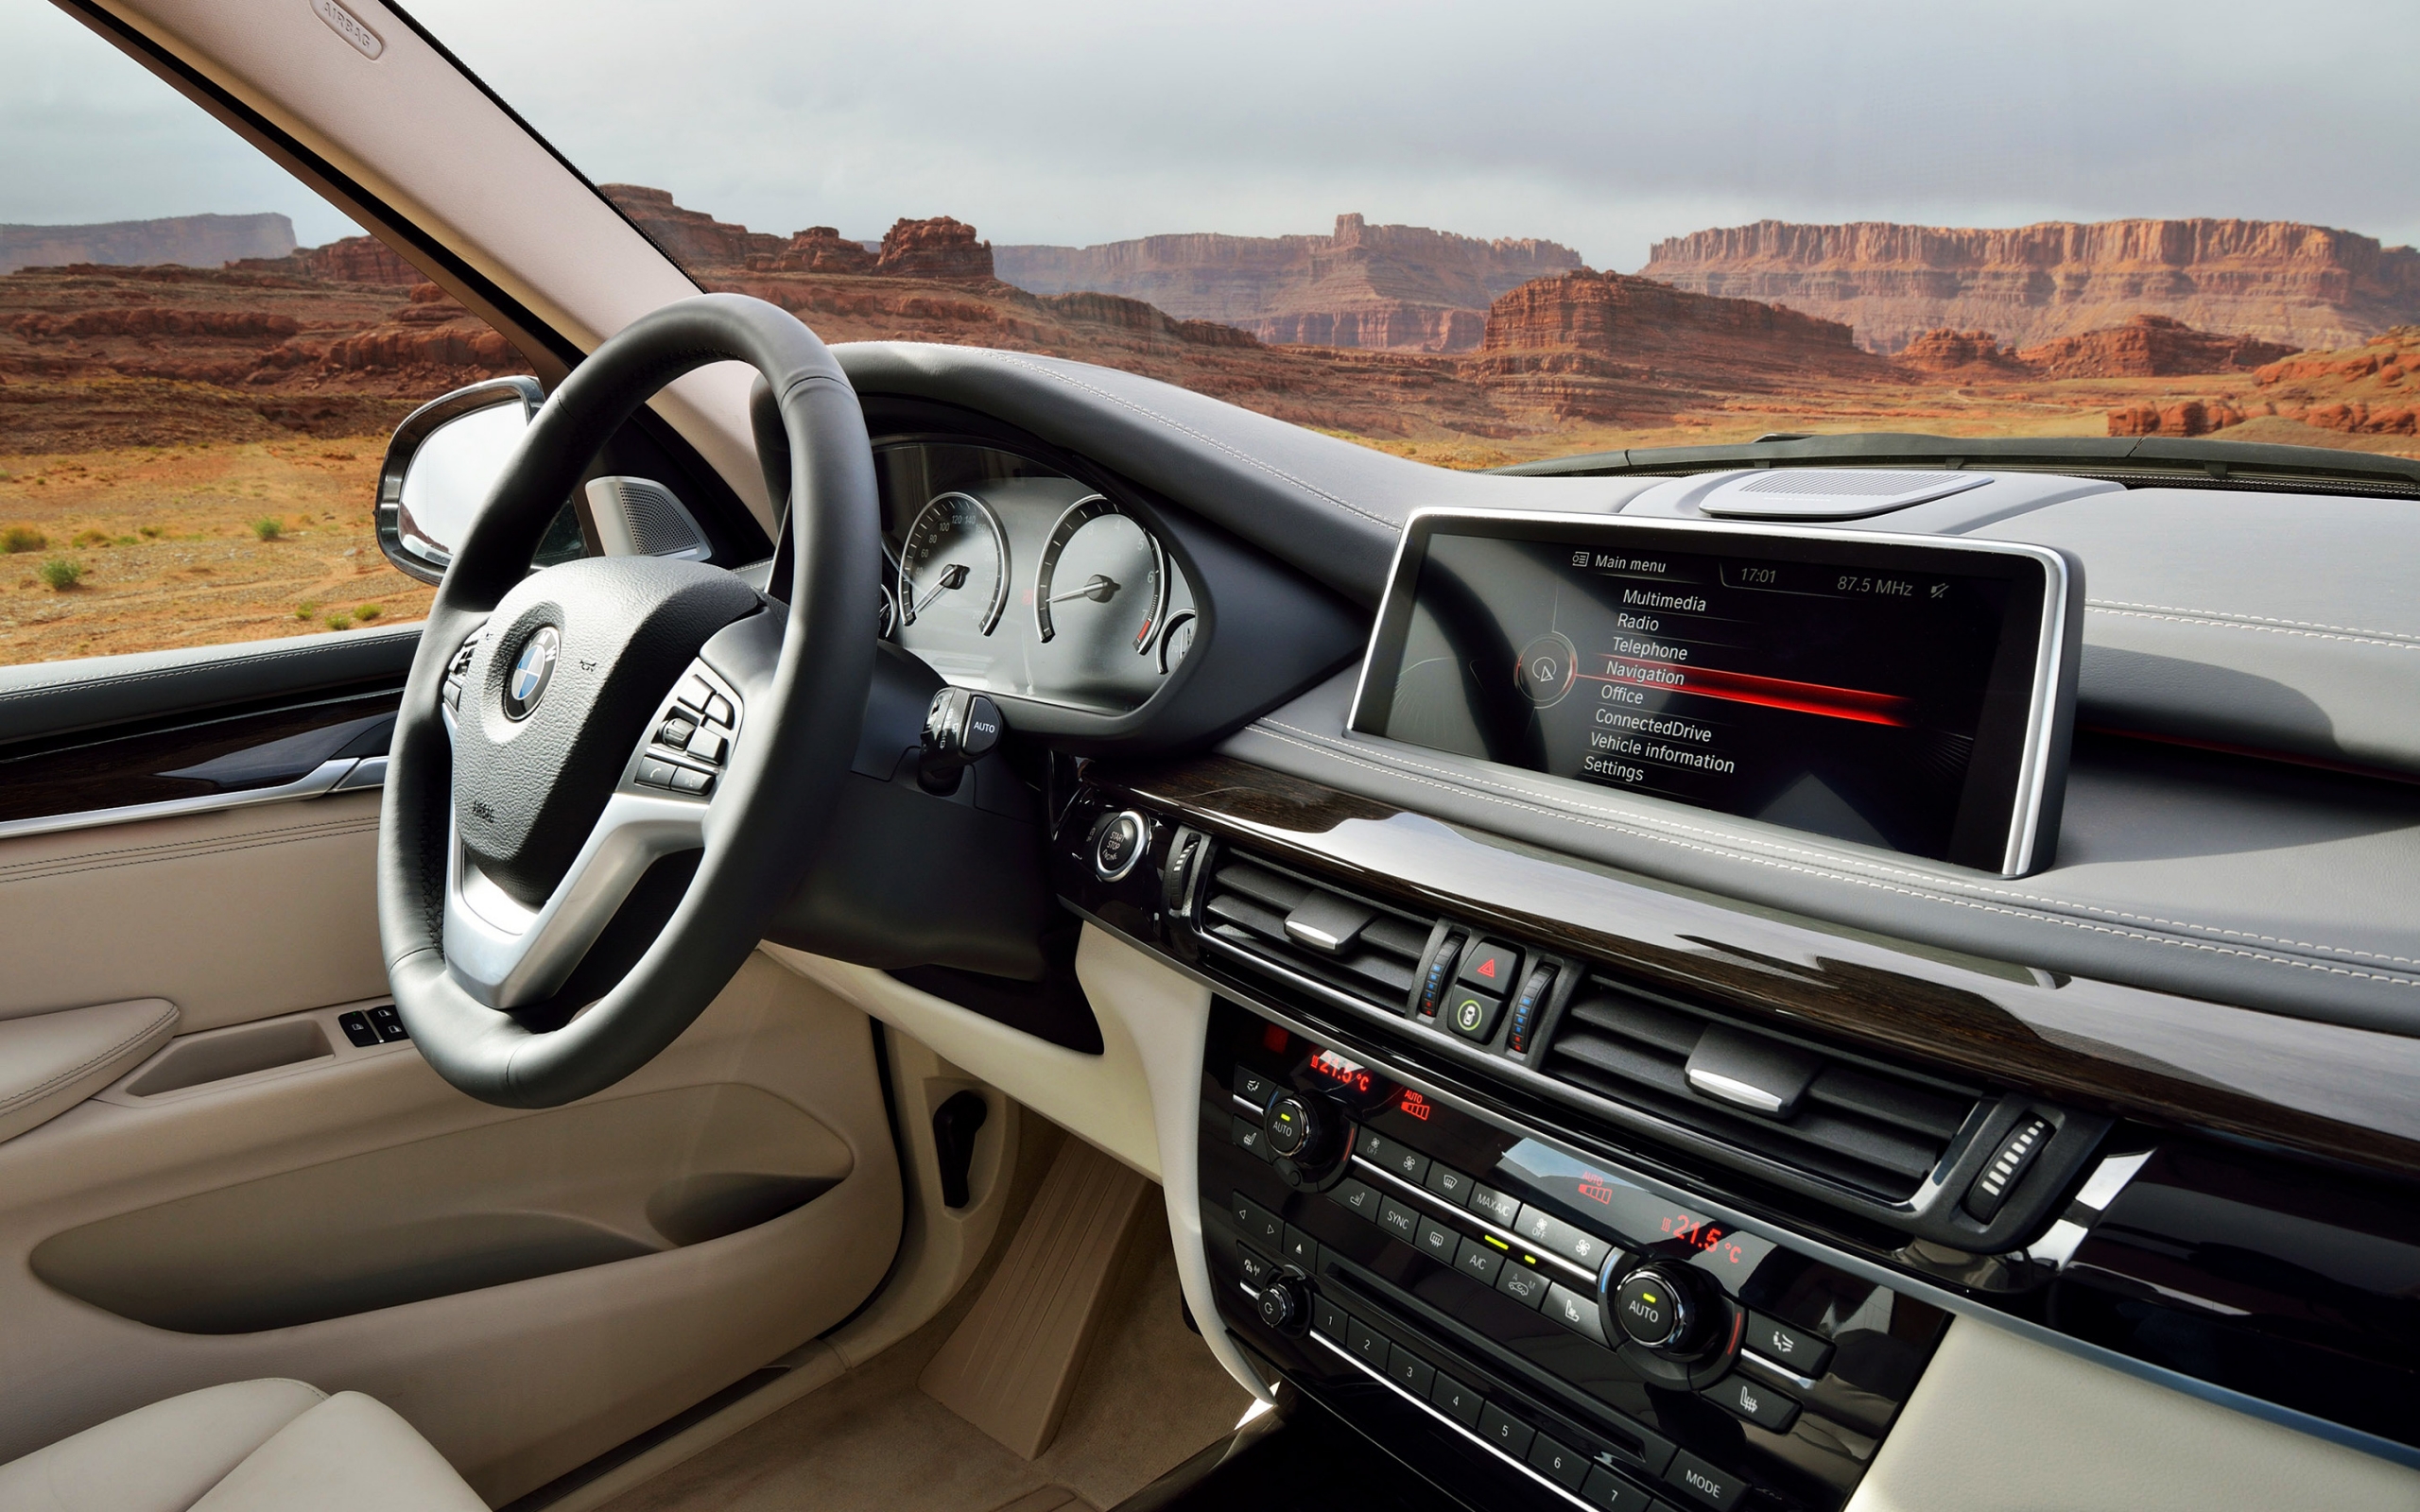 BMW X5 2014 Dashboard for 2560 x 1600 widescreen resolution